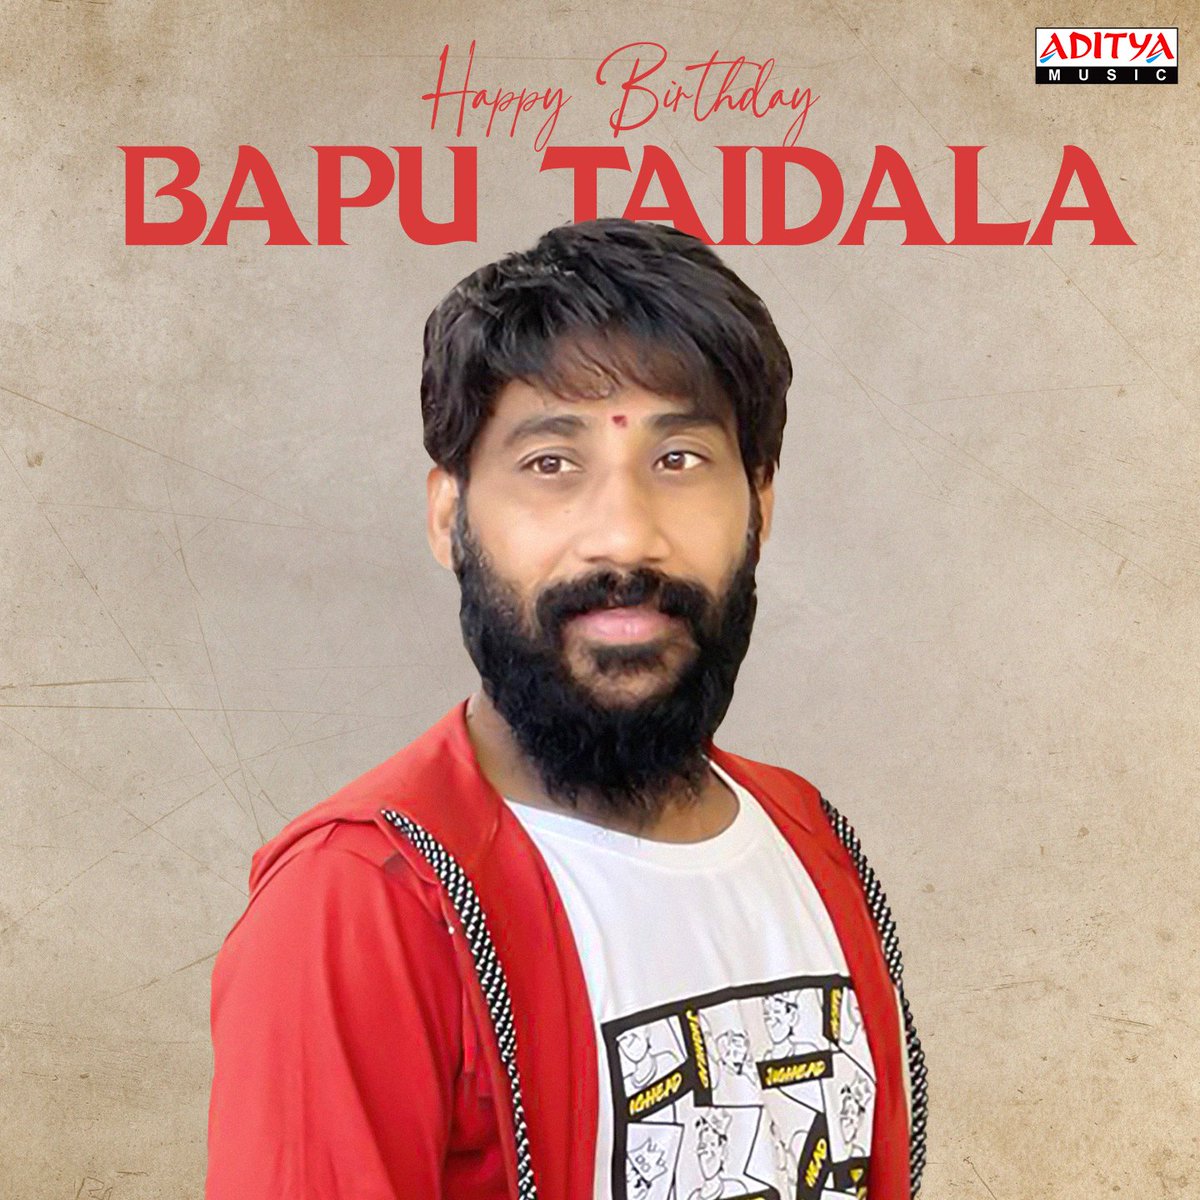 Warmest birthday wishes to the talented lyricist #BapuTaidala! Have a wonderful birthday filled with music and happiness.🎶 #HBDBapuTaidala